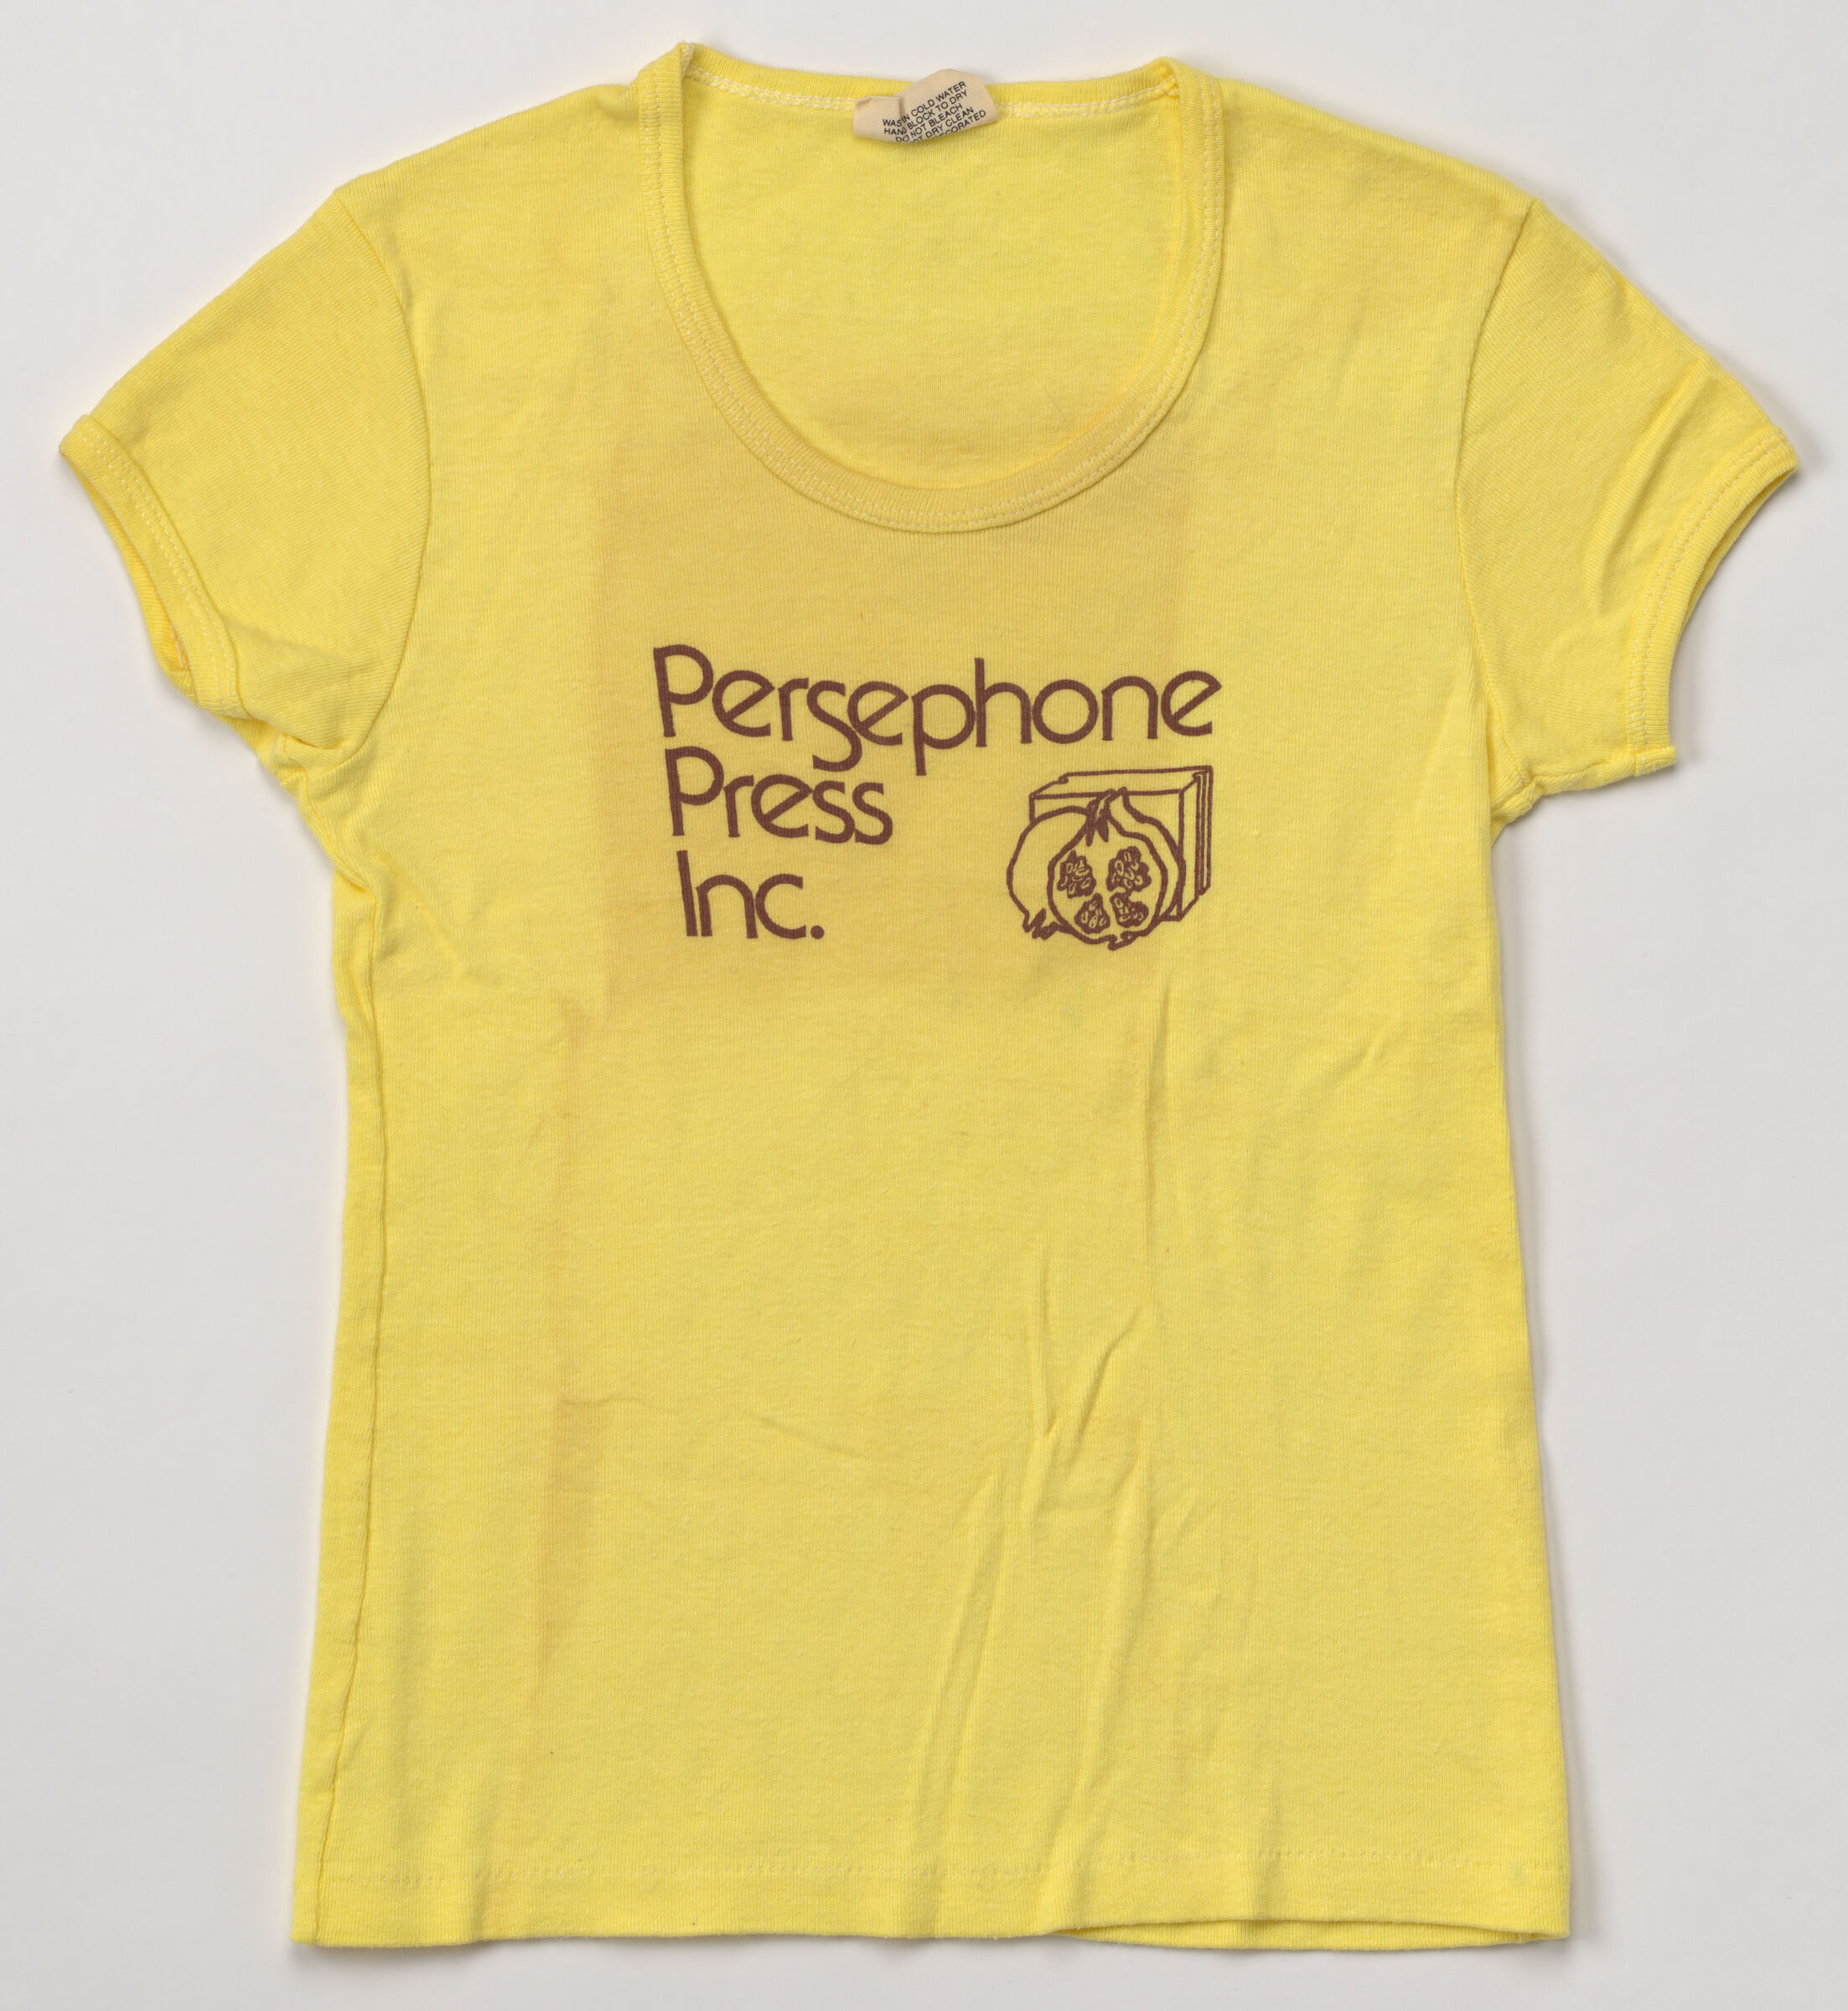 Persephone Press Inc. t-shirt